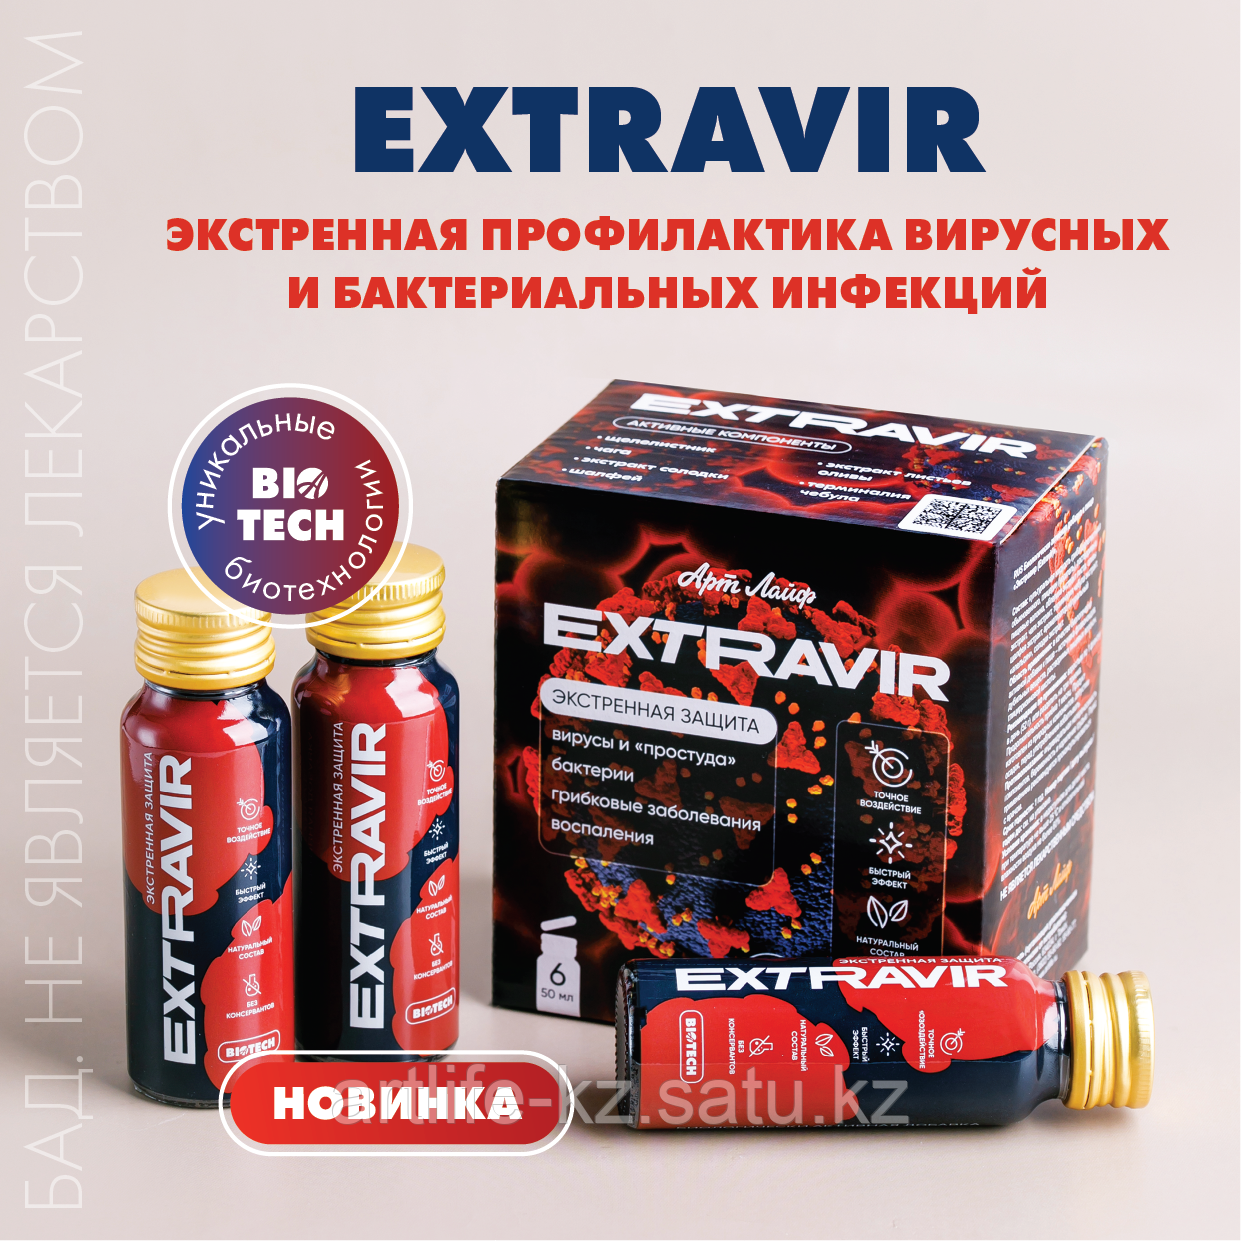 Extravir, 6 фл. по 50 мл.